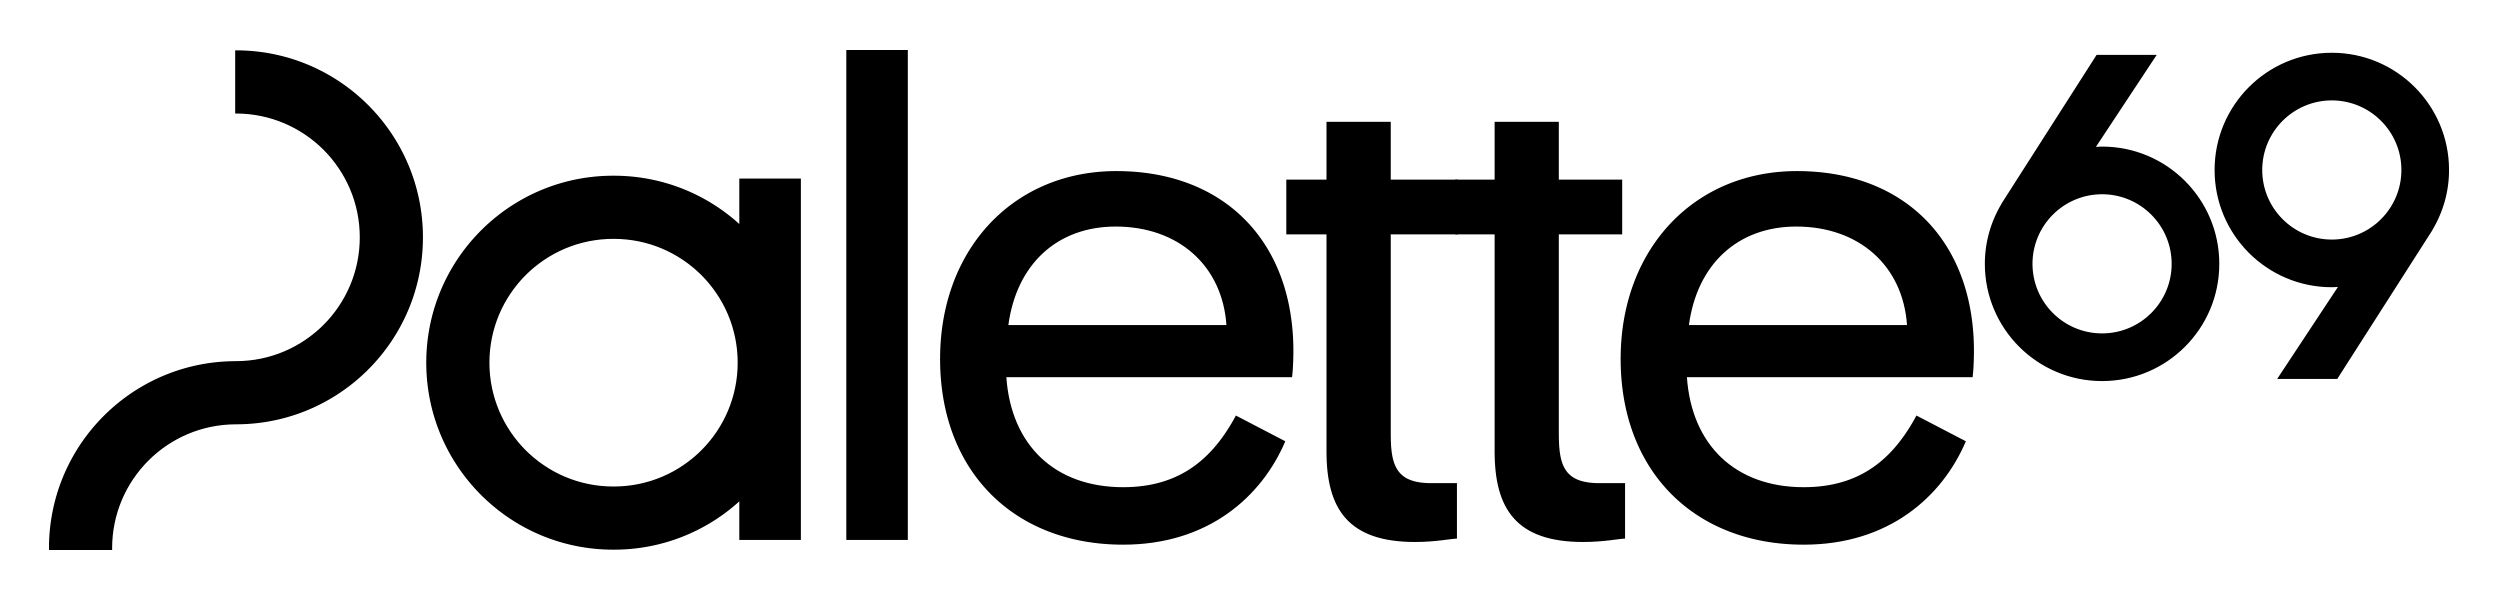 Palette69 Logo